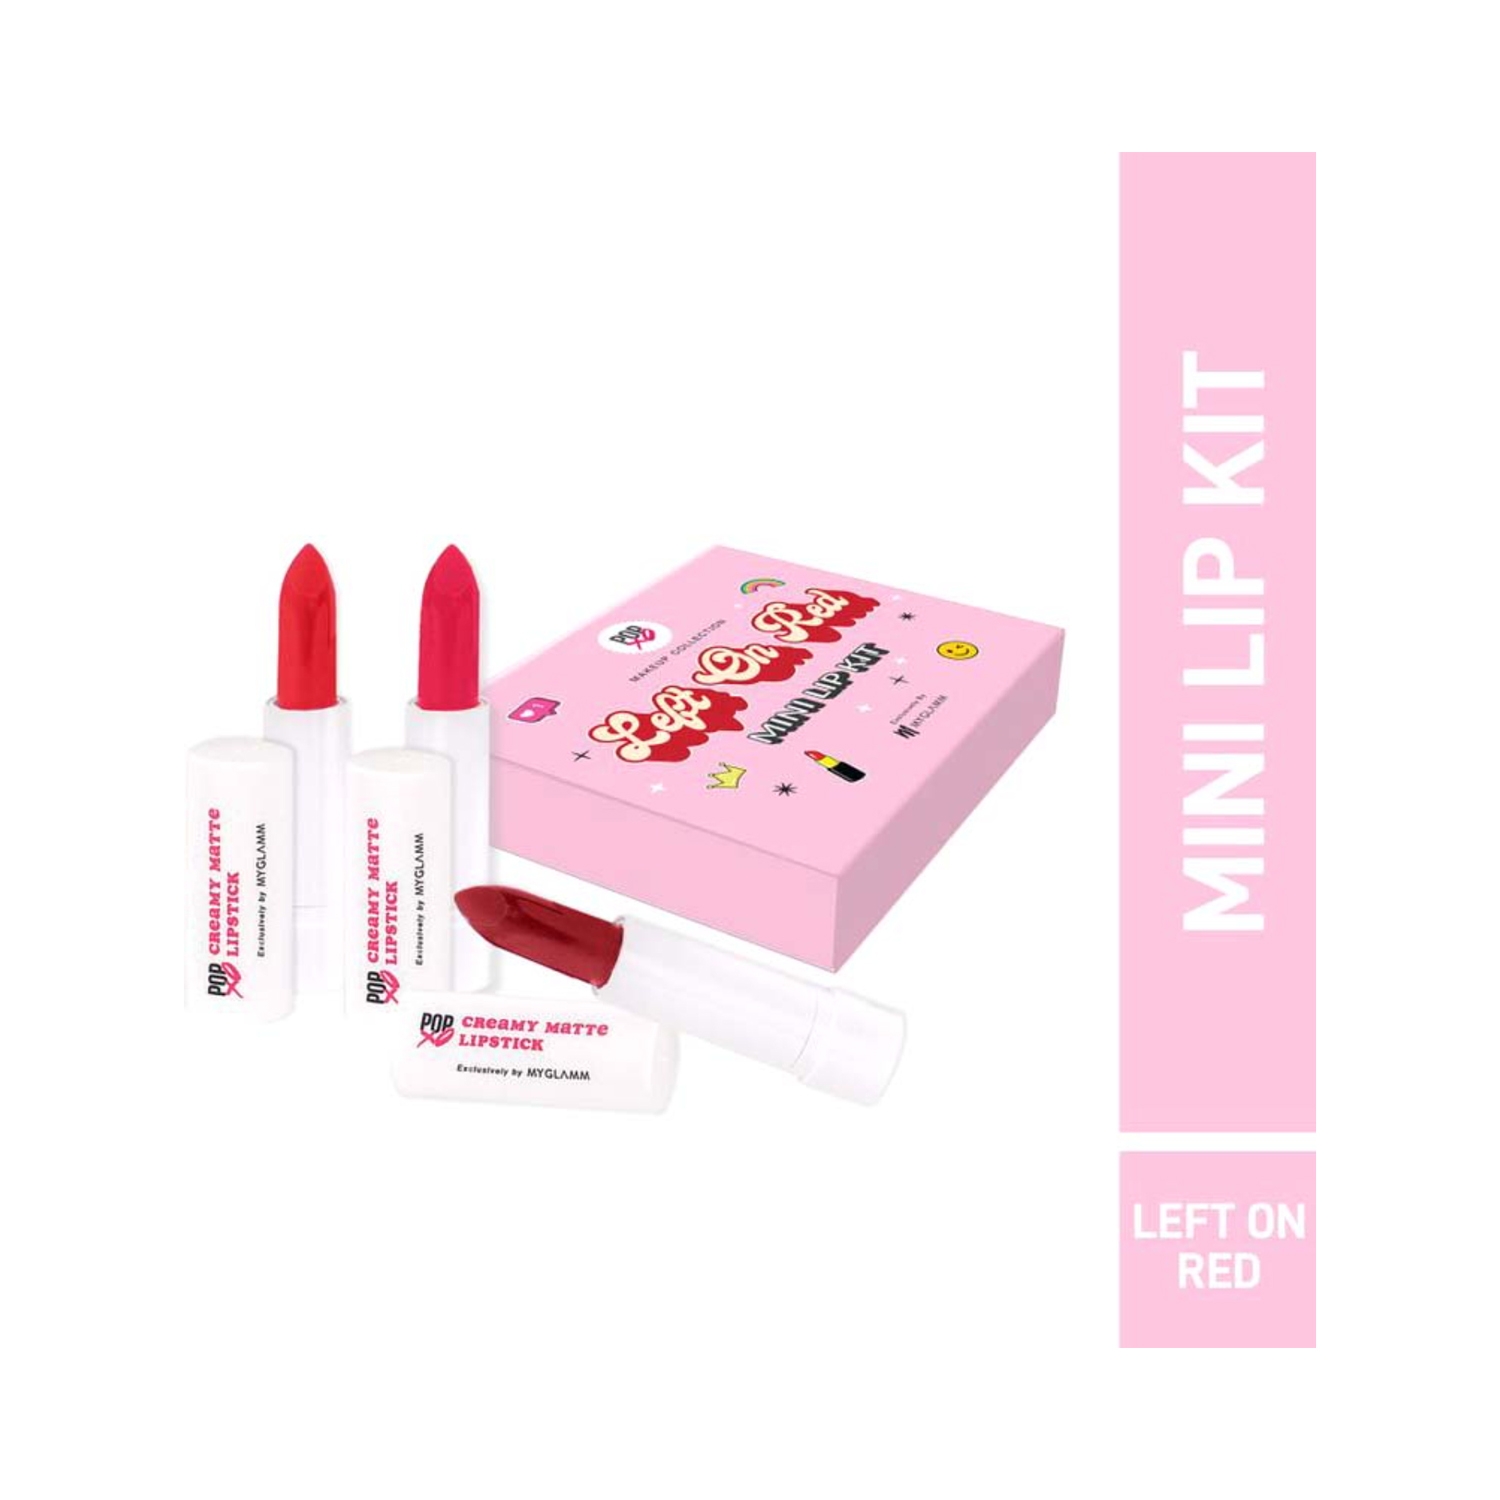 MyGlamm | MyGlamm Popxo Makeup Mini Lip Kit - Left On Red (3Pcs)